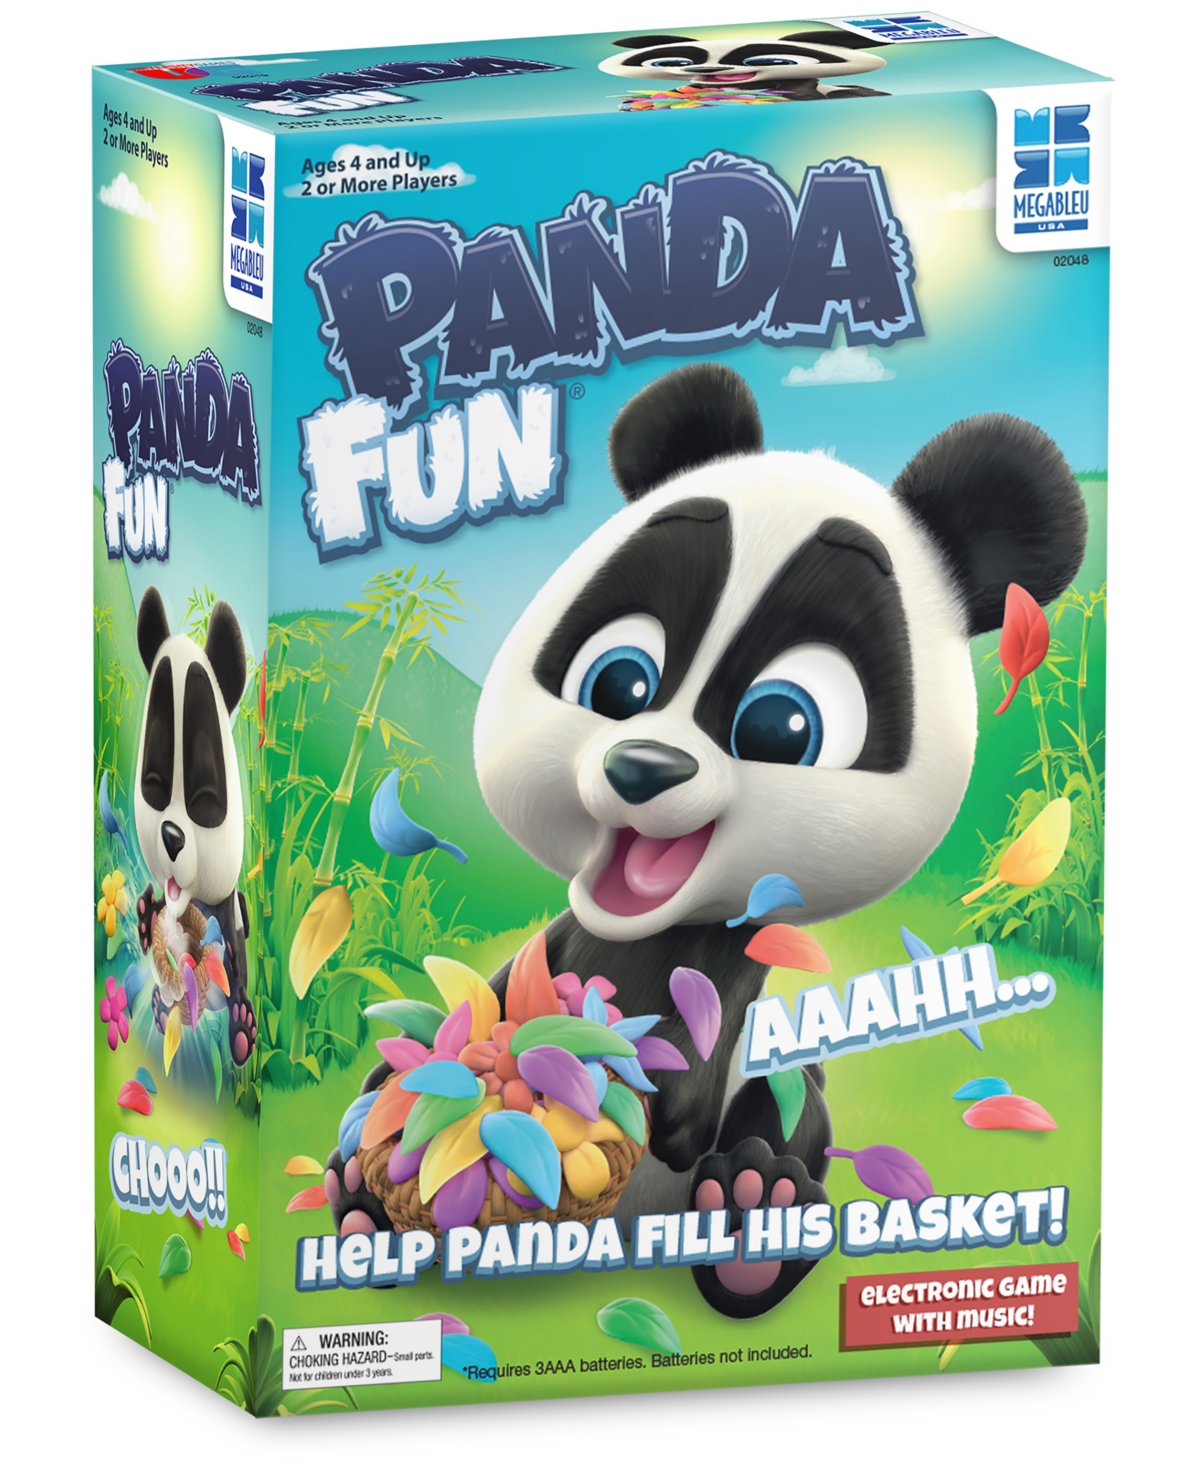 Megableu Usa Babies' Panda Fun Set, 28 Piece In Multi